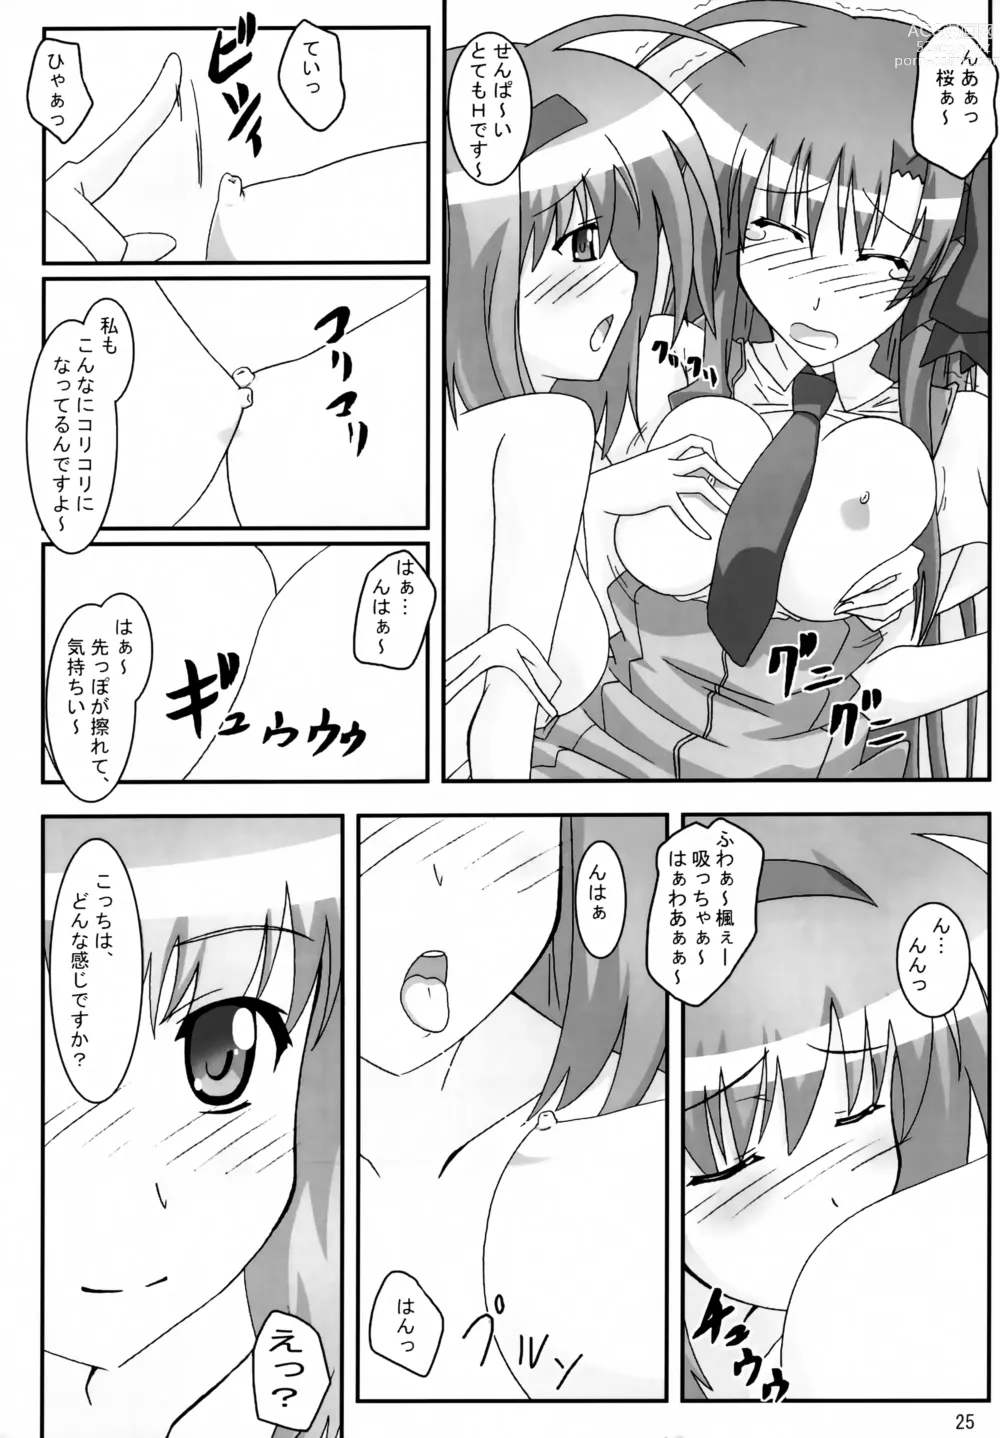 Page 24 of doujinshi SHUFFLE! With